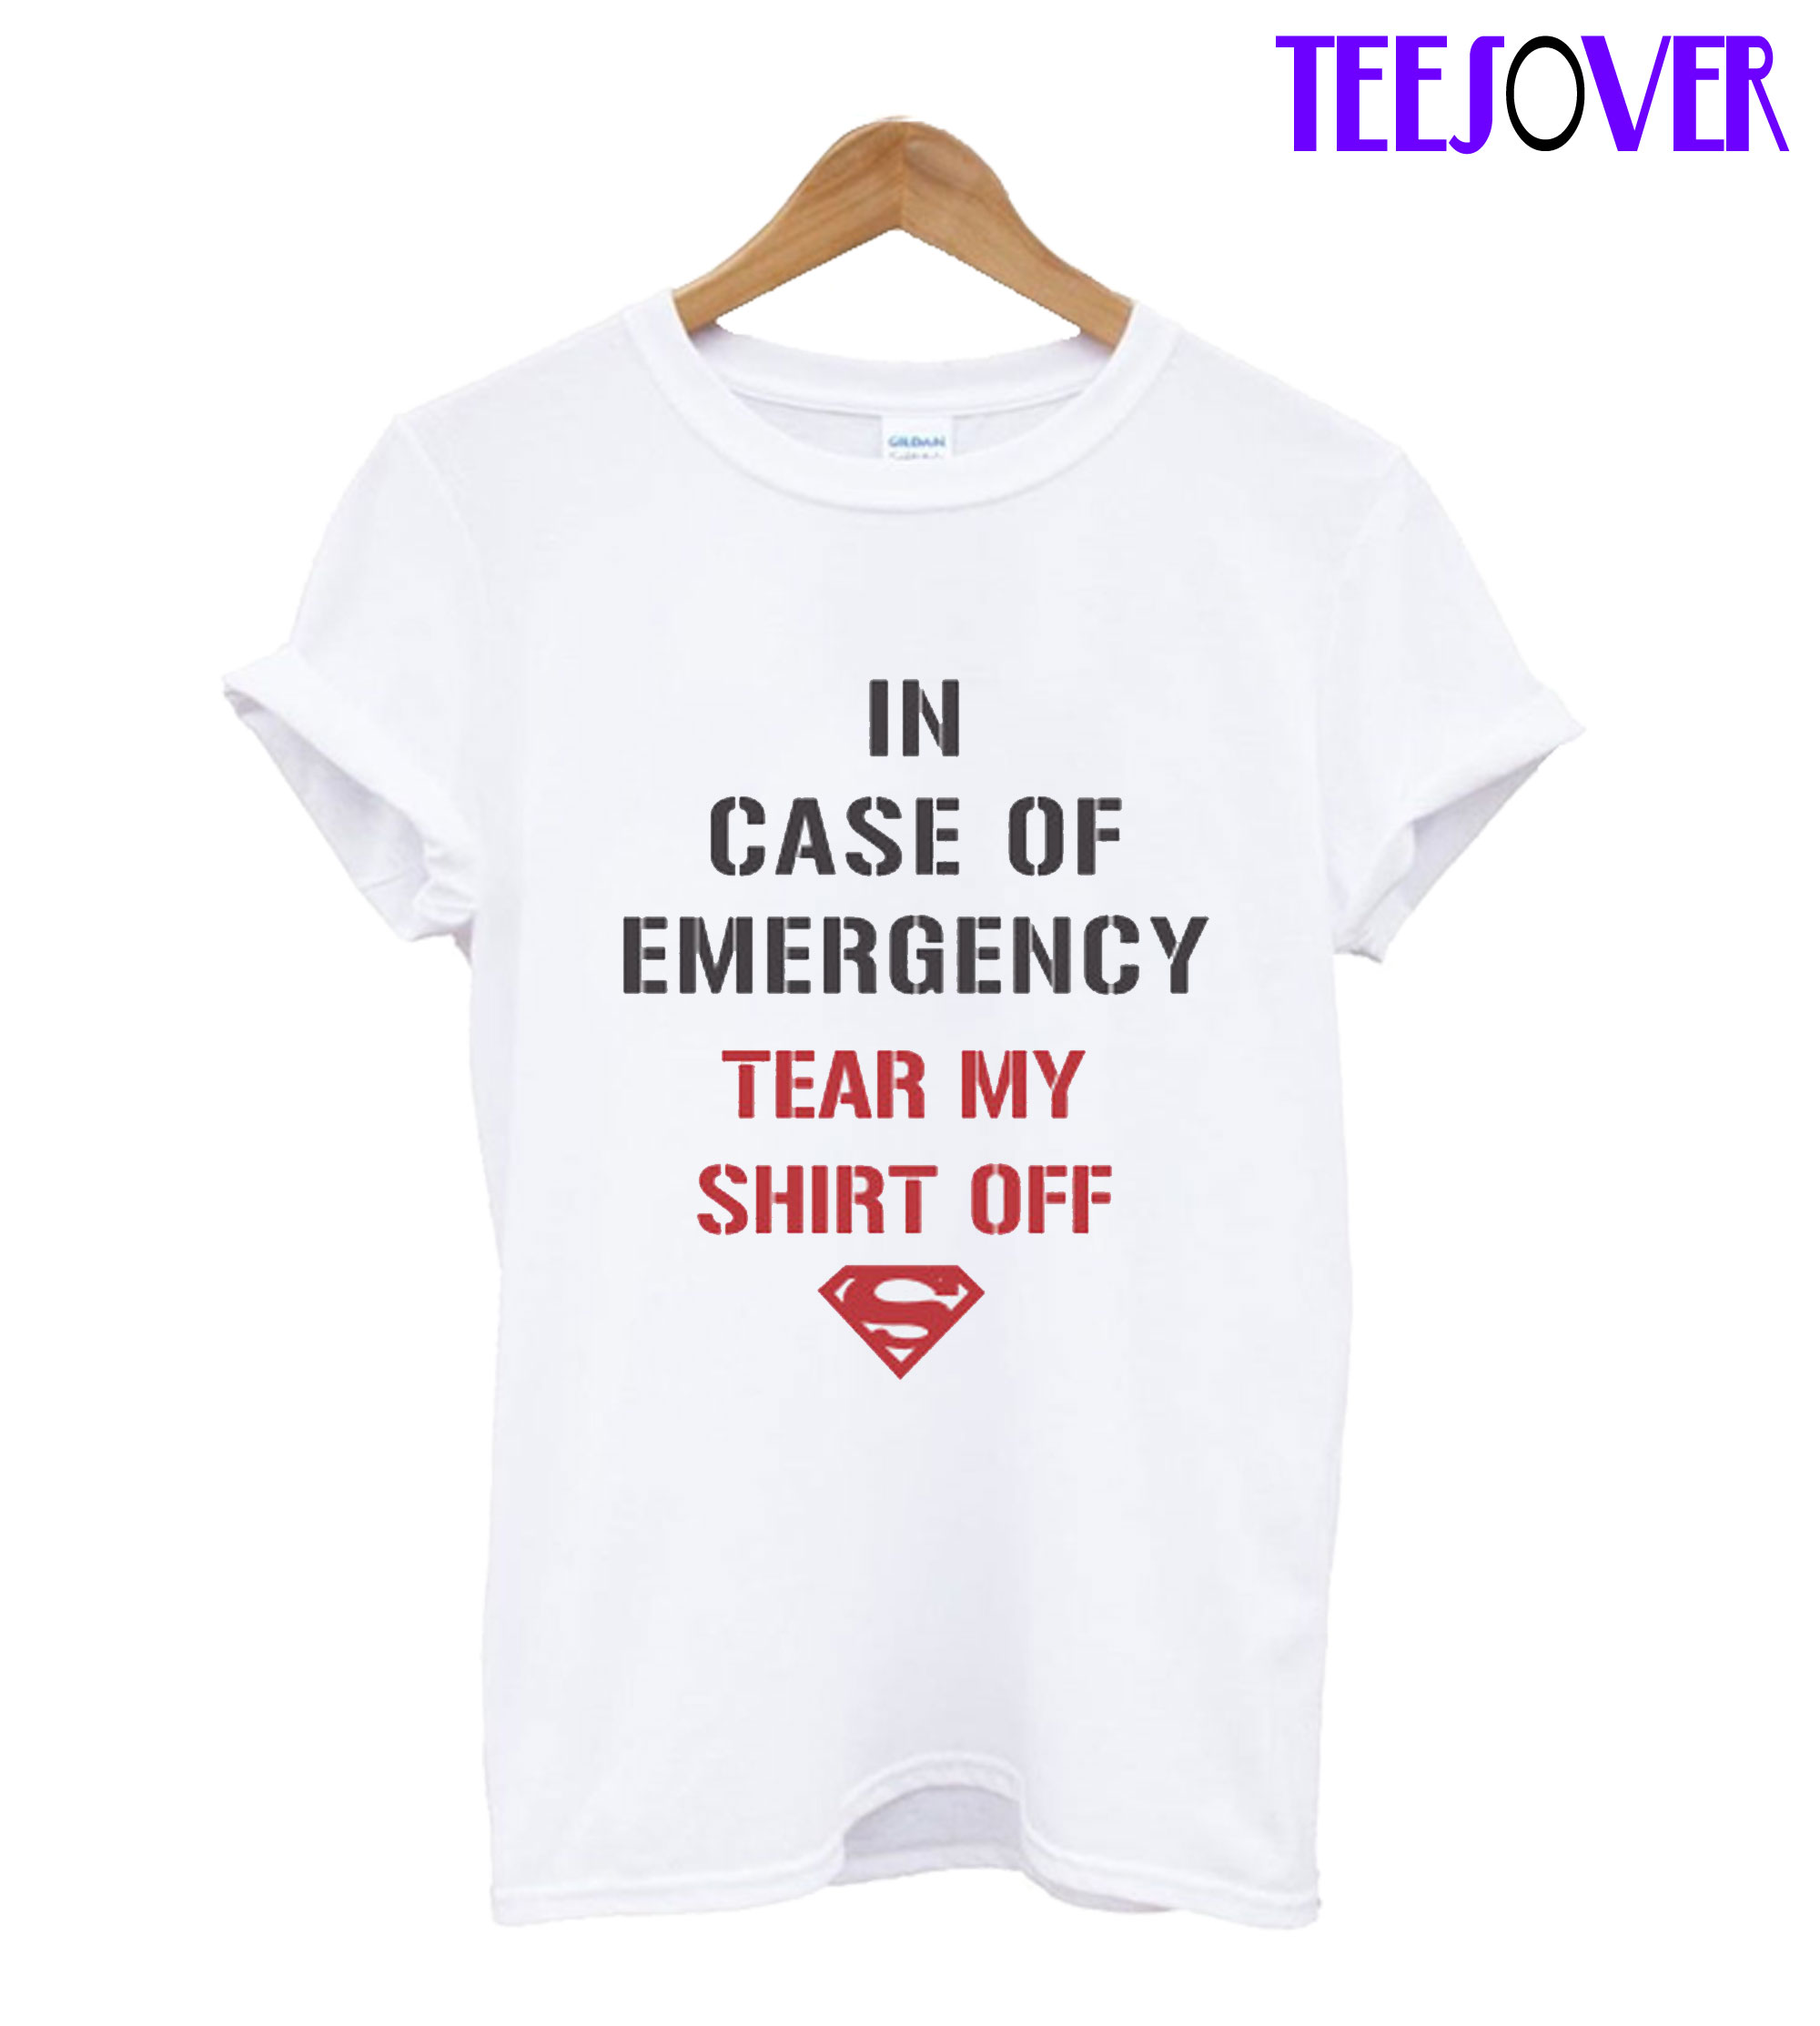 In Case of Emergency Tear My Shirt Off T-Shirt